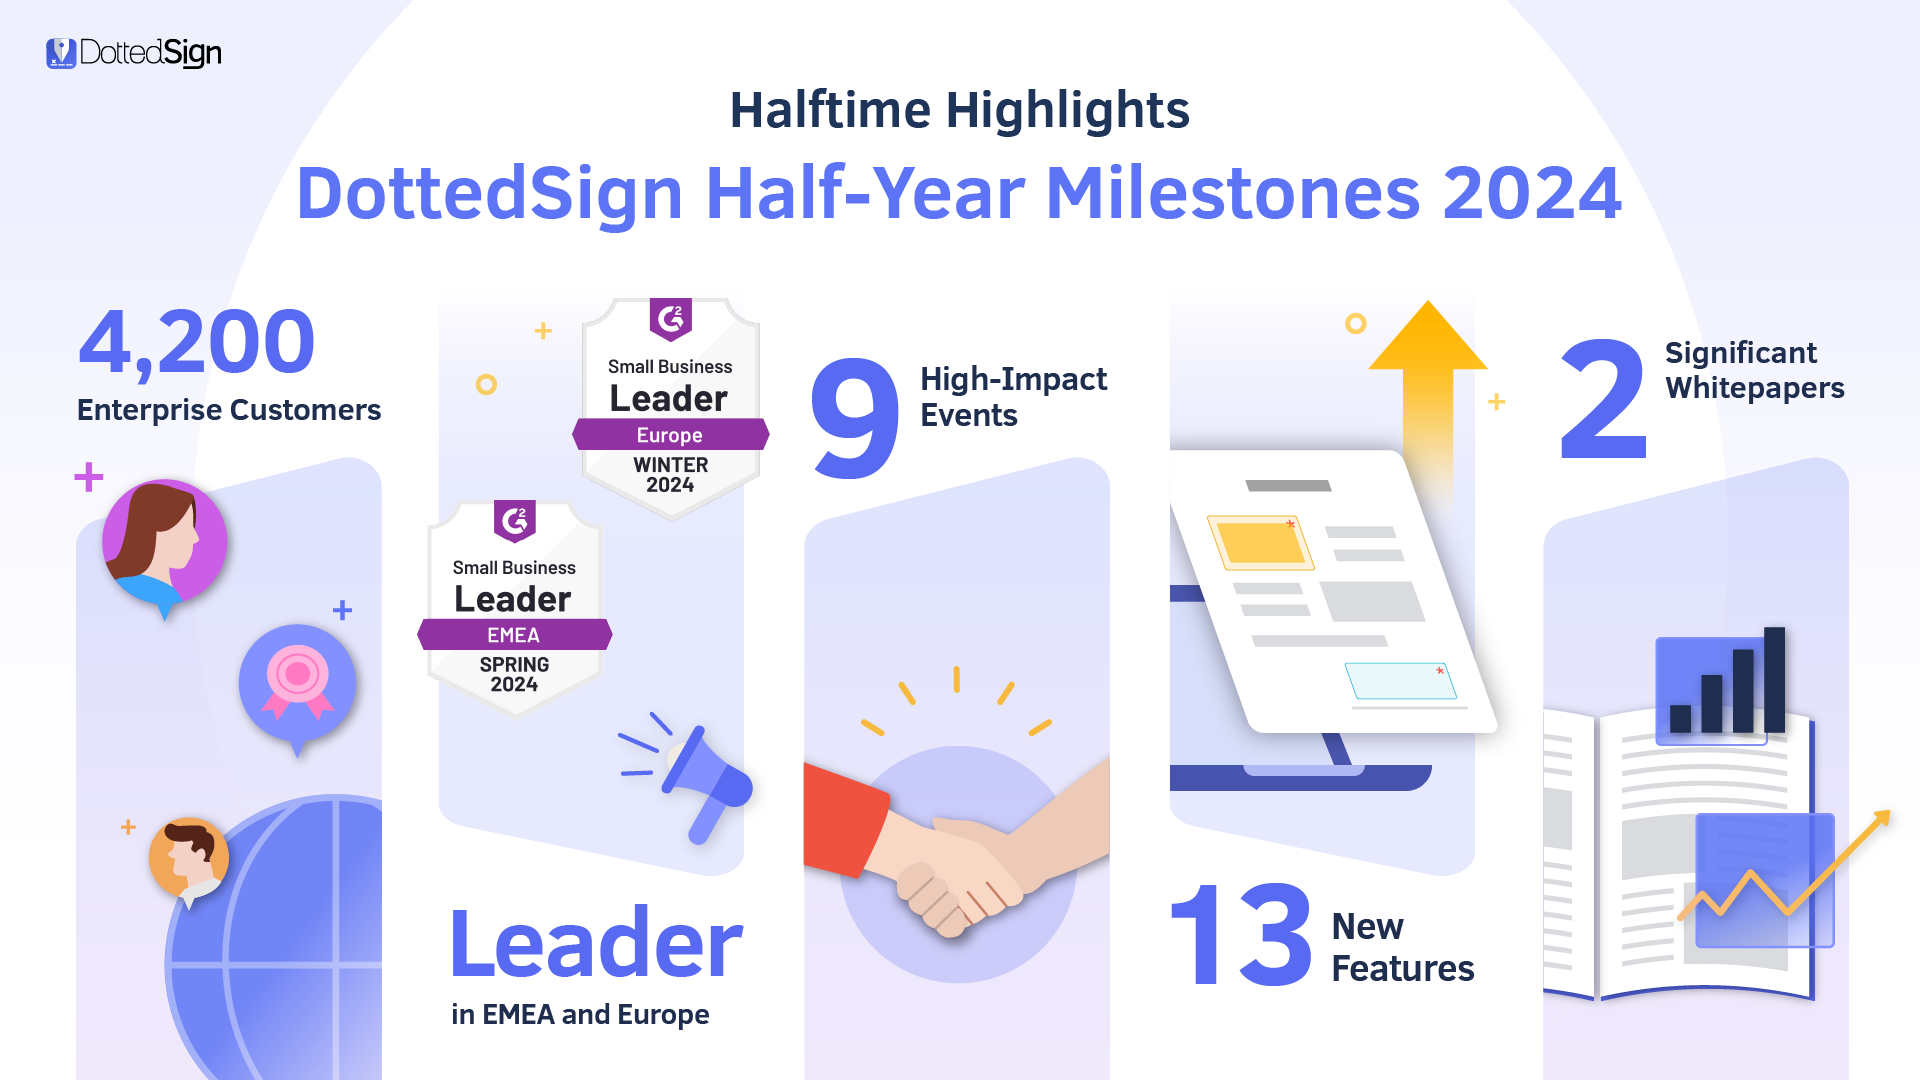 Halftime Highlights – DottedSign Half-Year Milestones 2024